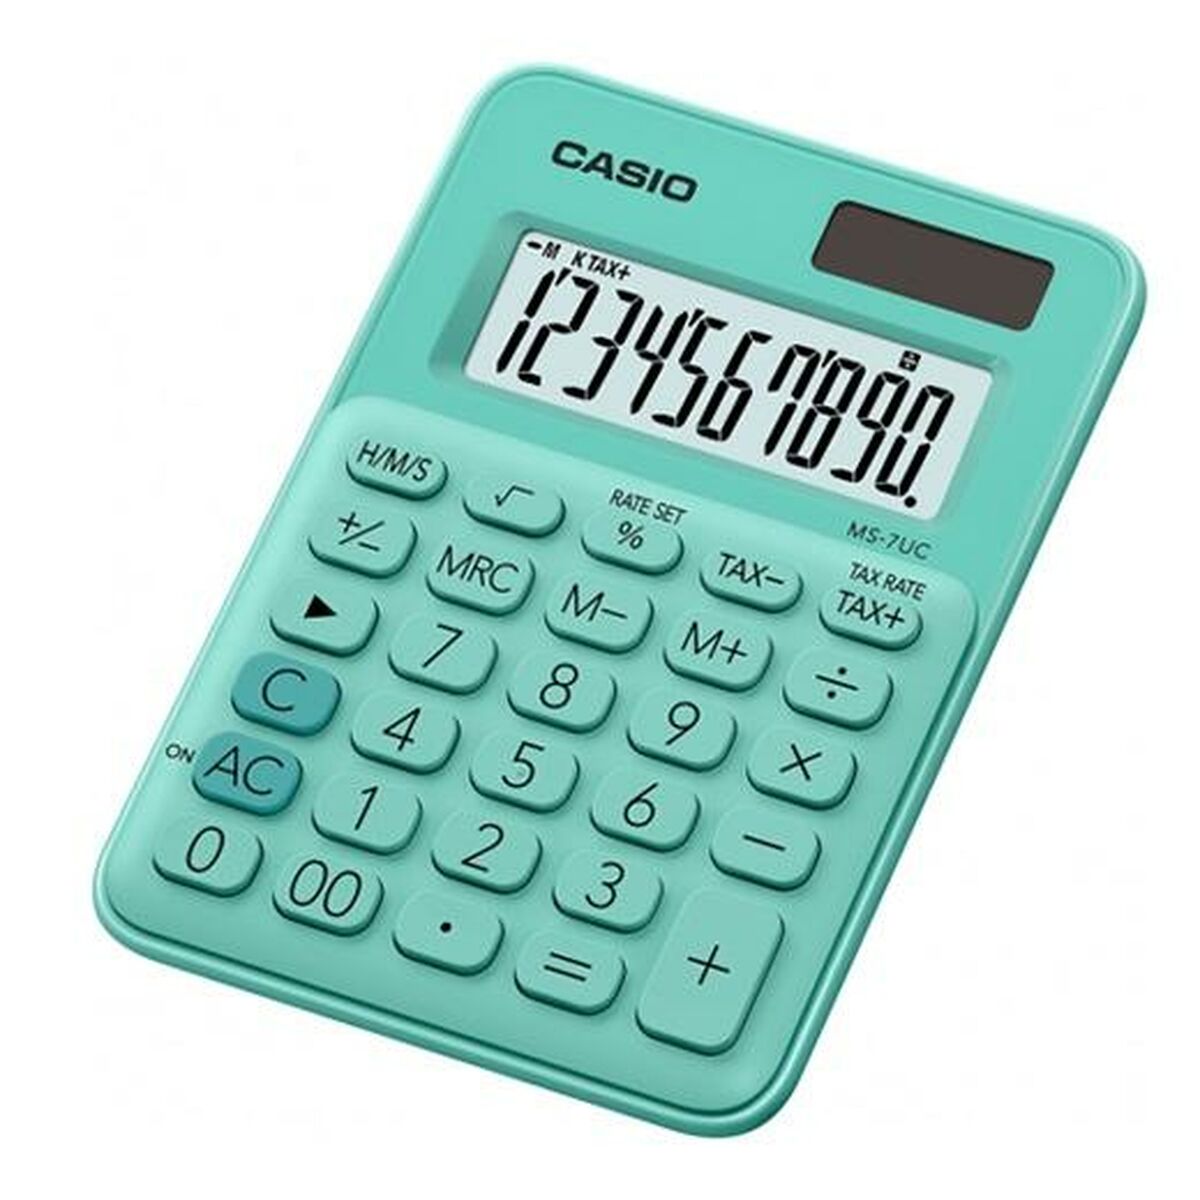 Calculatrices